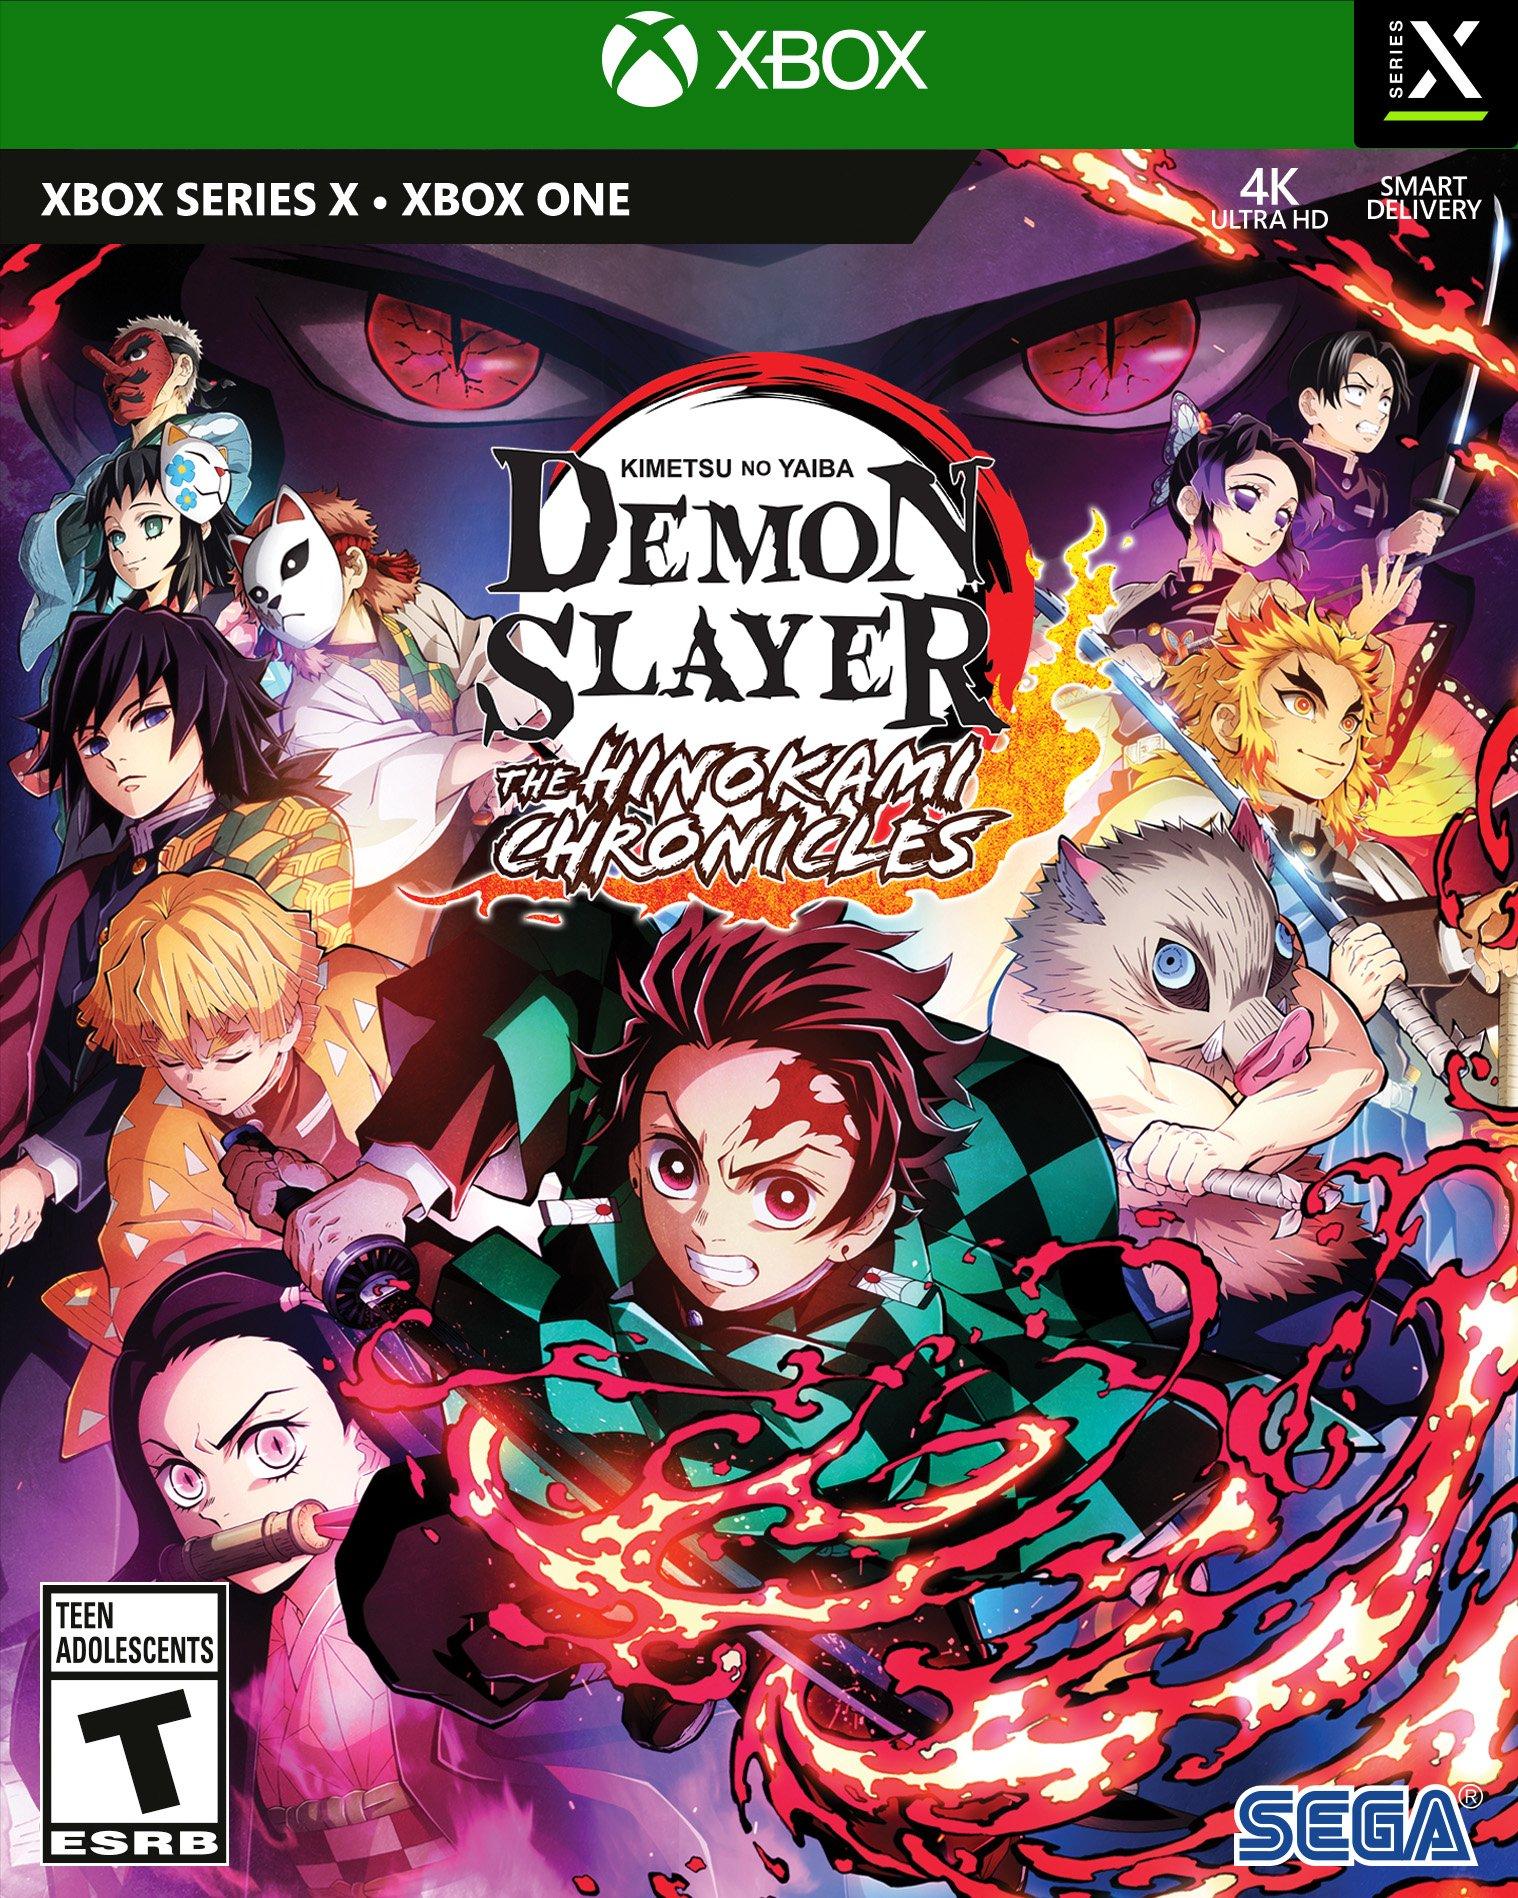 Demon Slayer - Kimetsu no Yaiba - The Hinokami Chronicles Xbox One